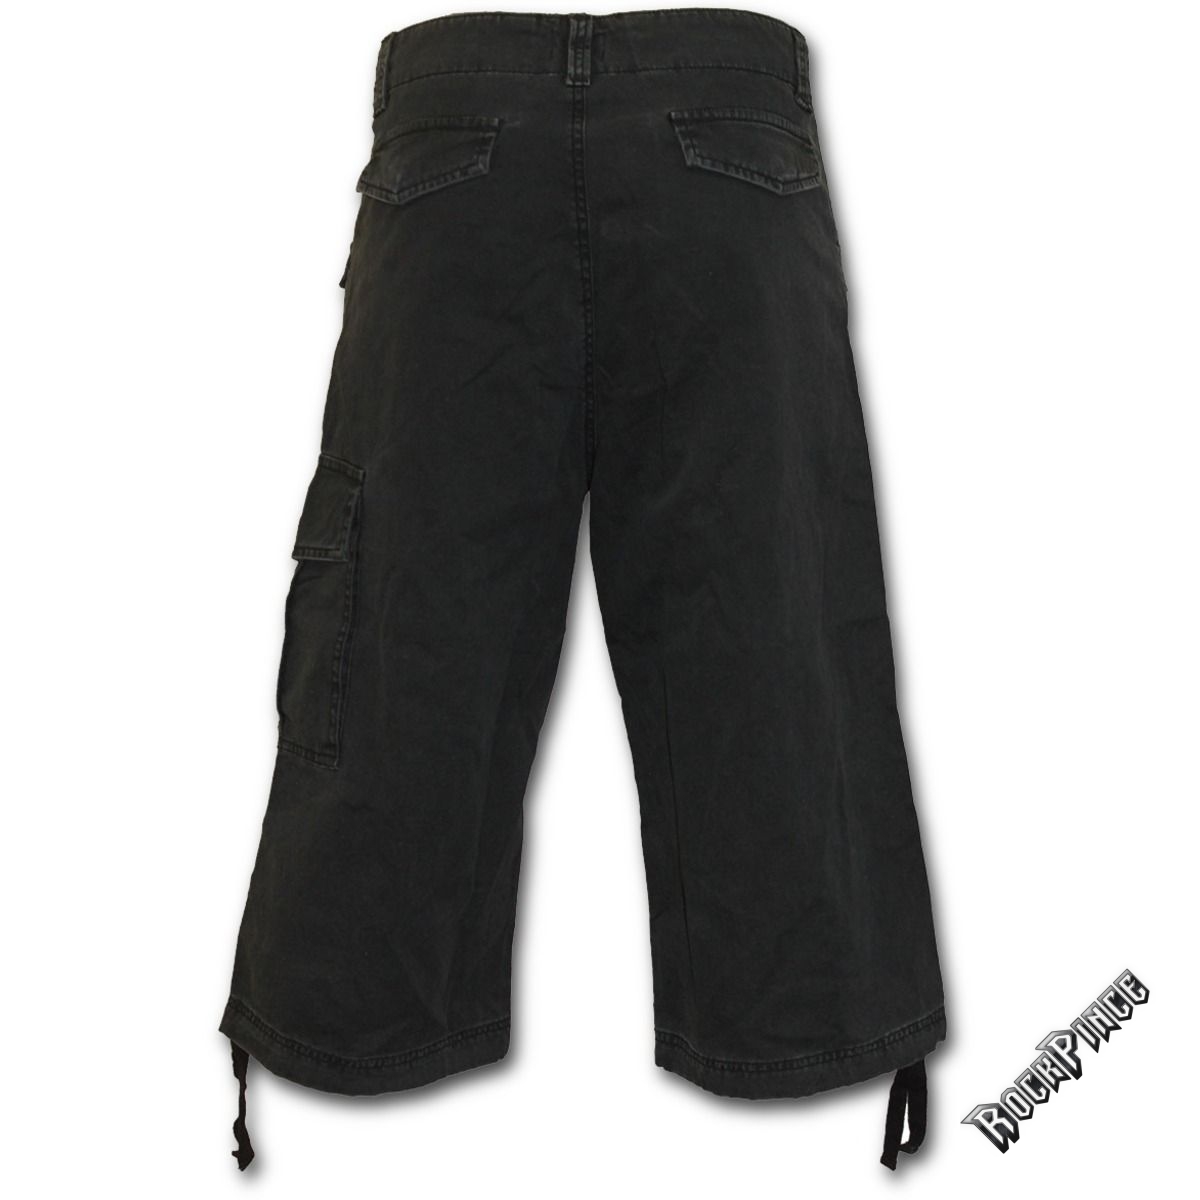 METAL STREETWEAR - Vintage Cargo Shorts 3/4 Long Black (Plain) - P003M705